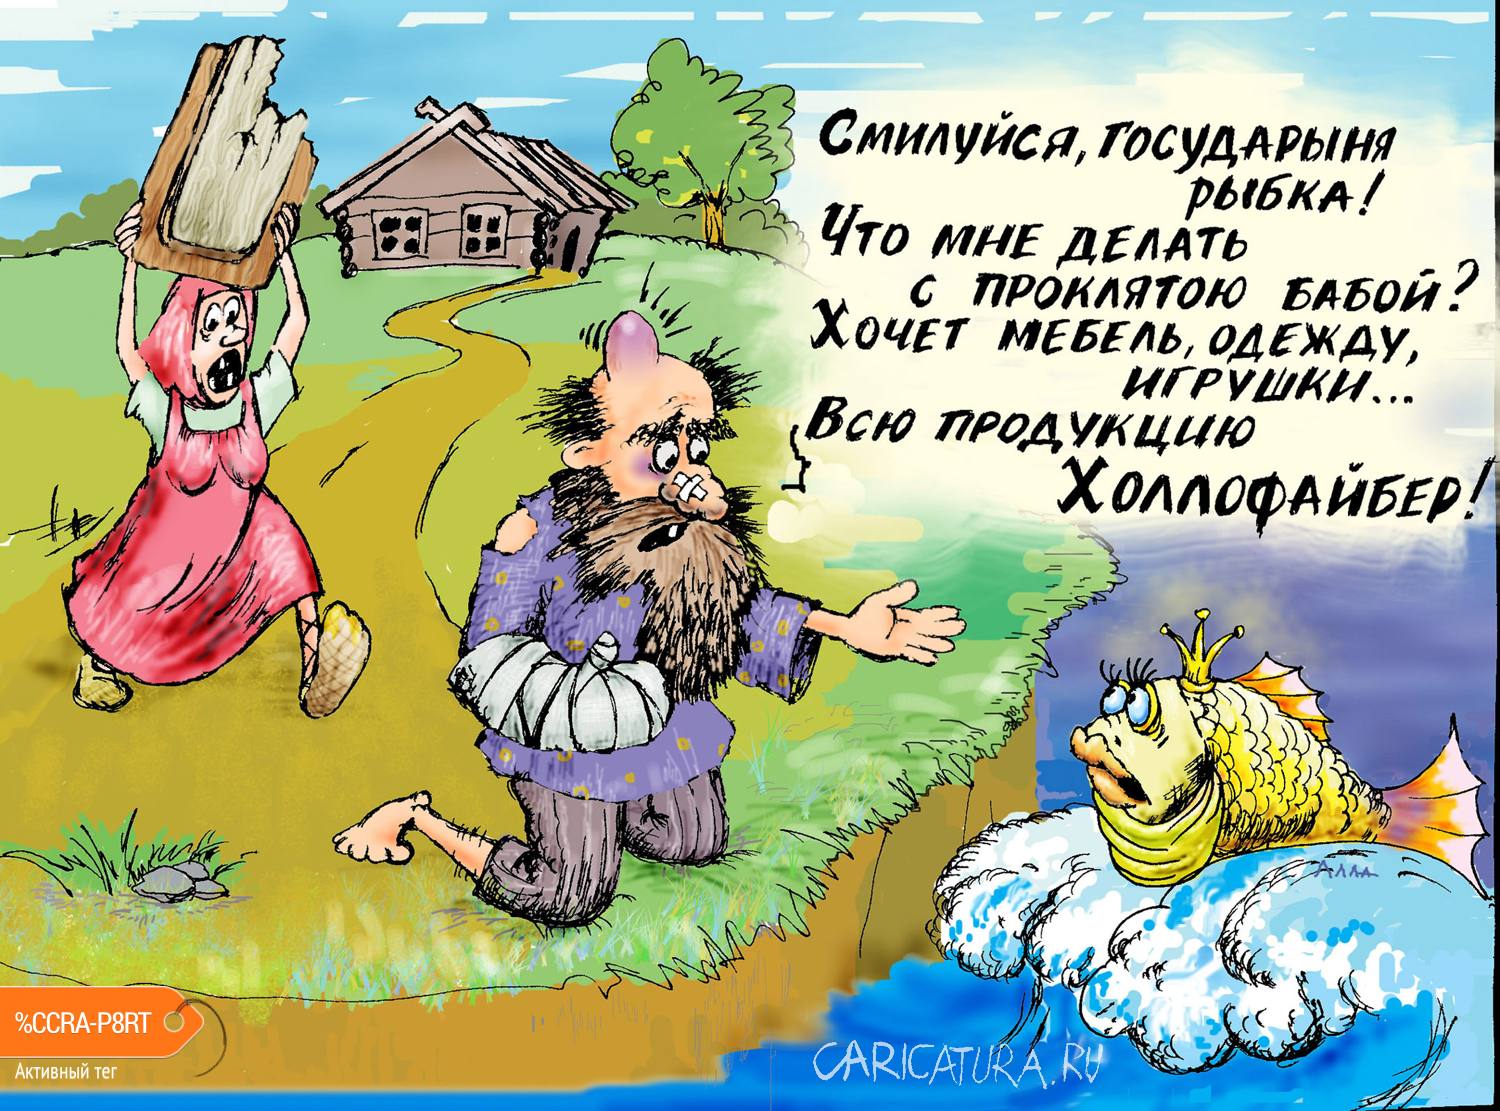 Карикатура "Желание комфорта", Алла Сердюкова